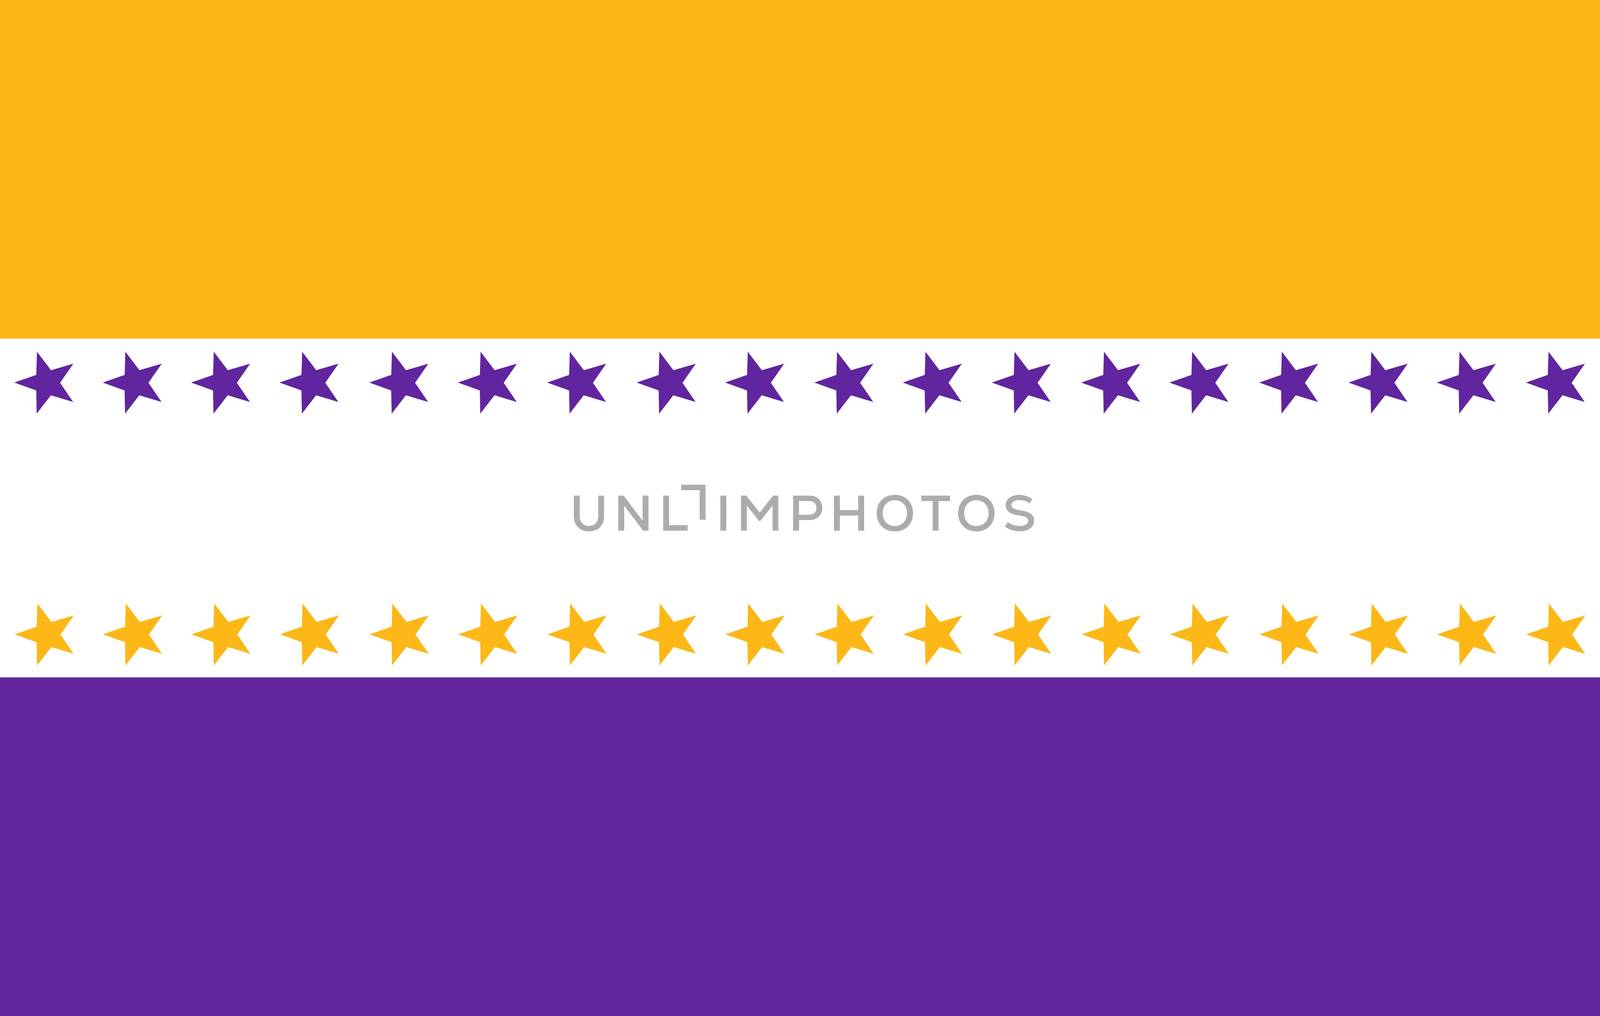 Nineteenth Amendment flag by tony4urban